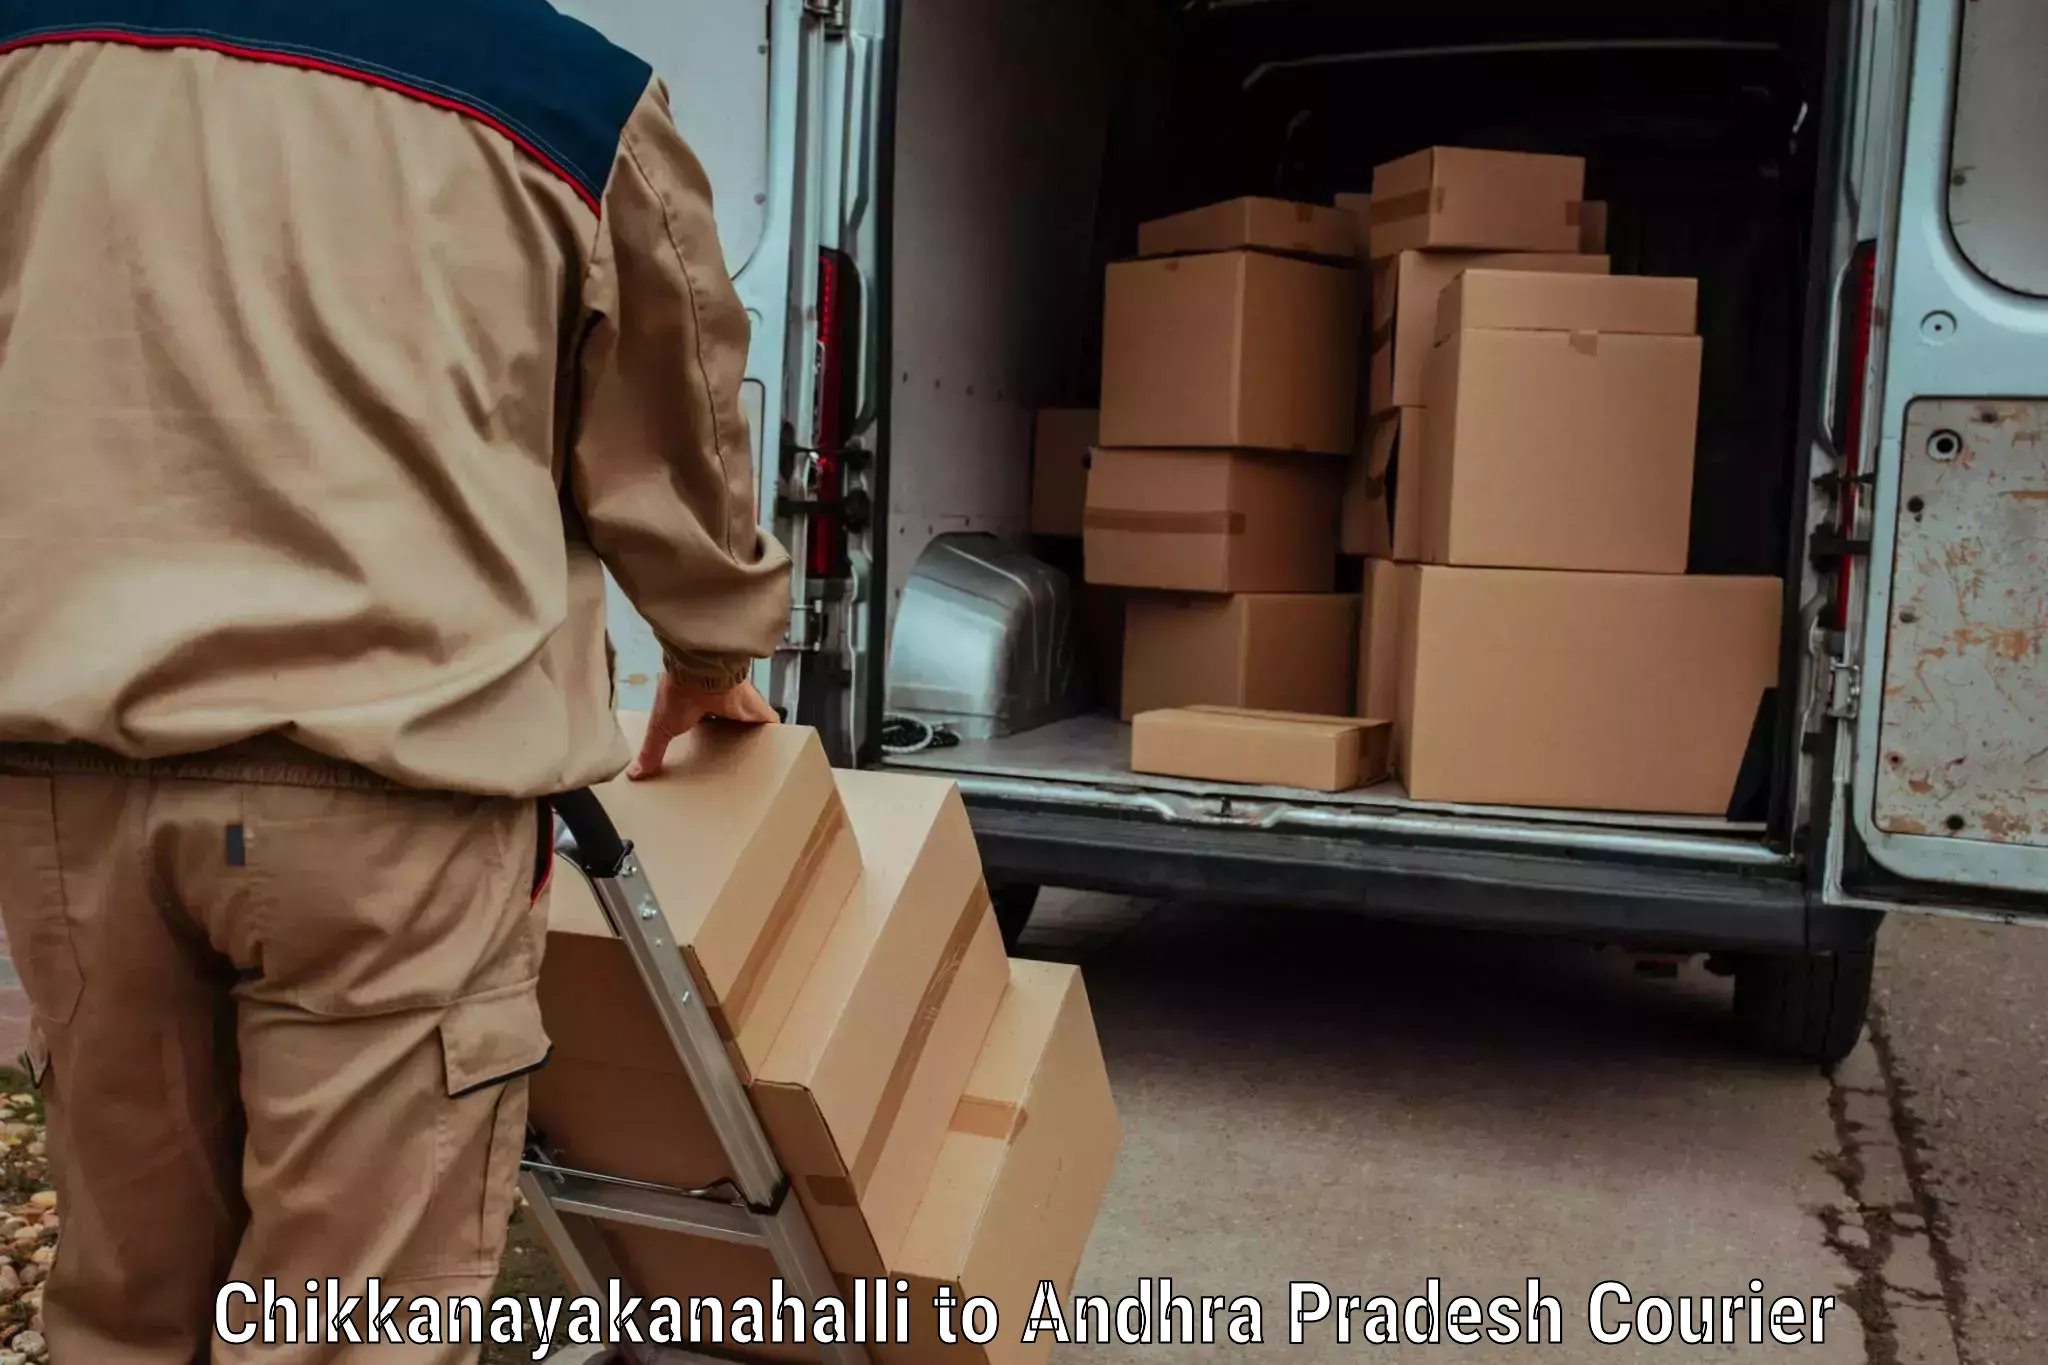 Baggage relocation service Chikkanayakanahalli to Andhra Pradesh